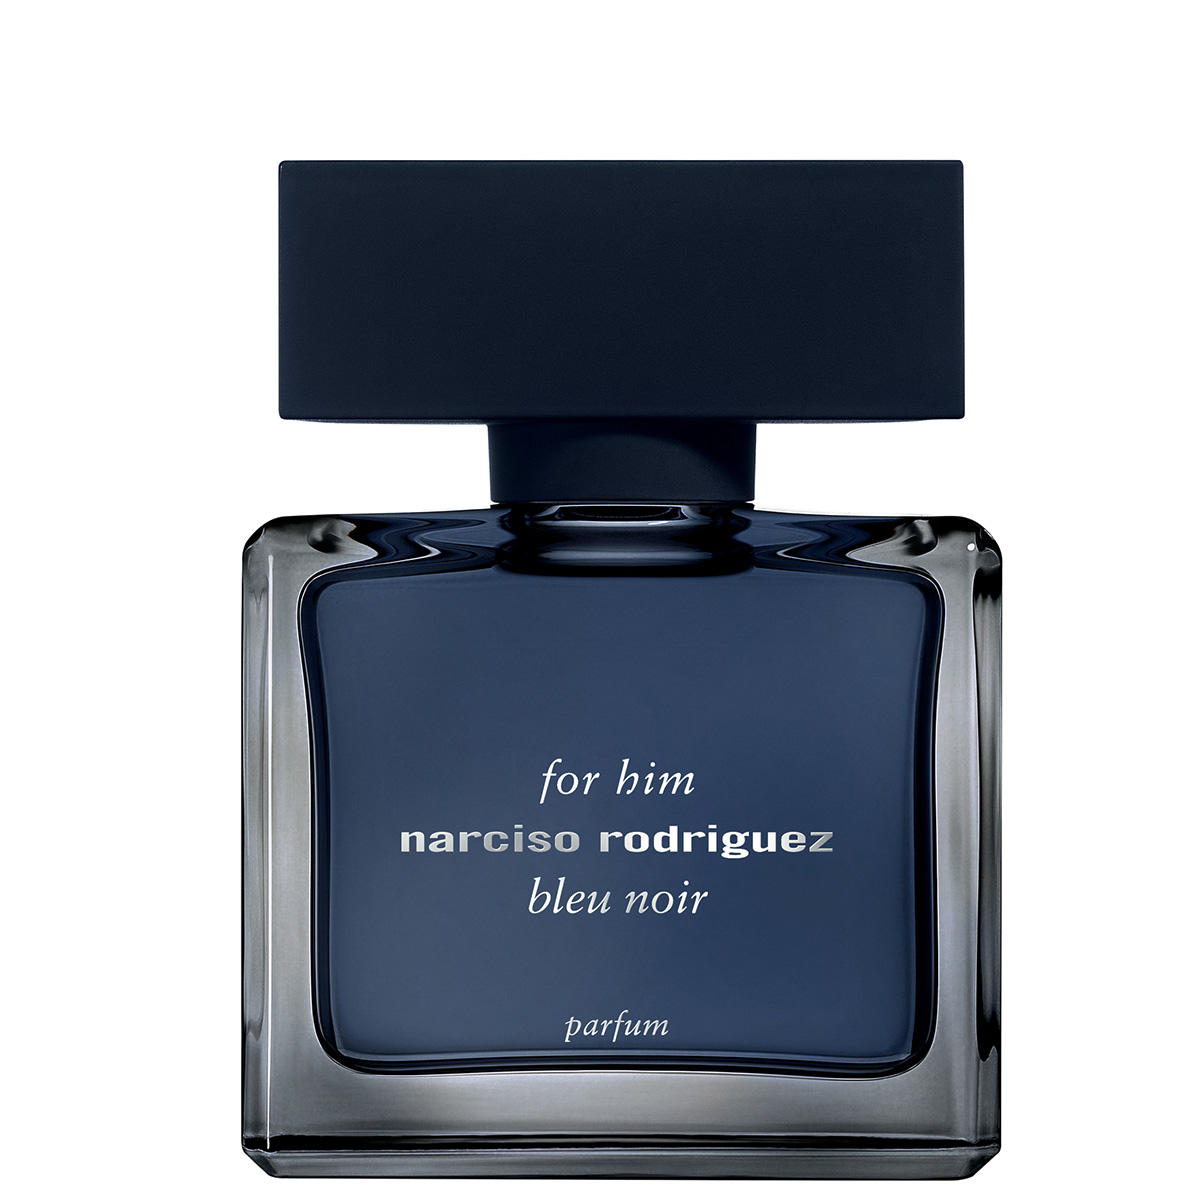 Narciso Rodriguez for him bleu noir Parfum 50 ml